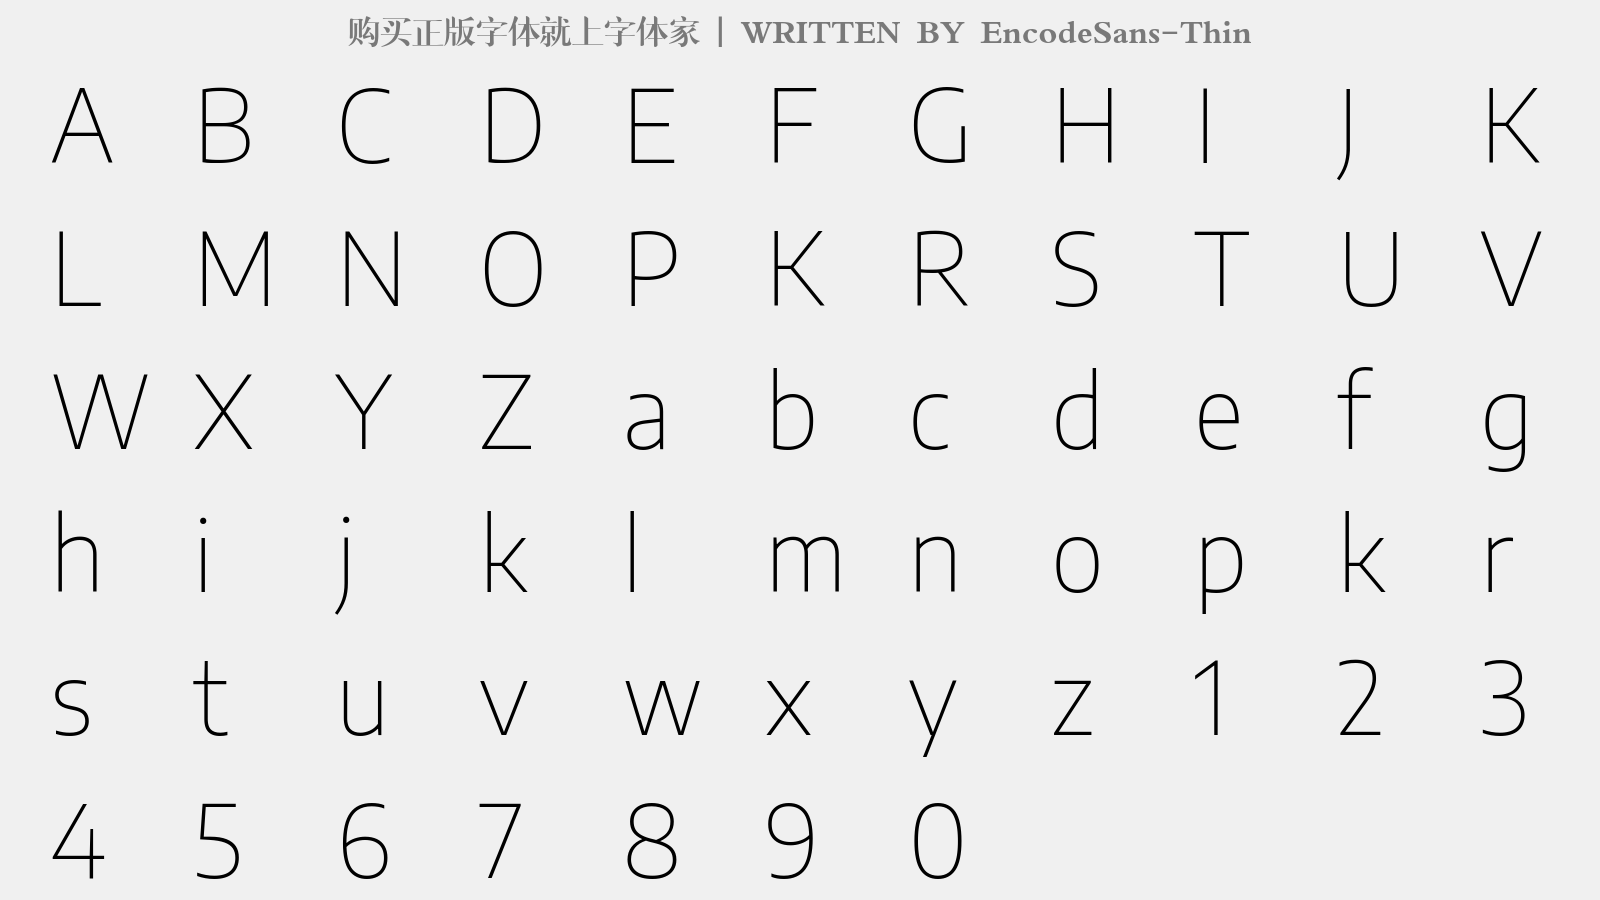 EncodeSans-Thin - 大写字母/小写字母/数字